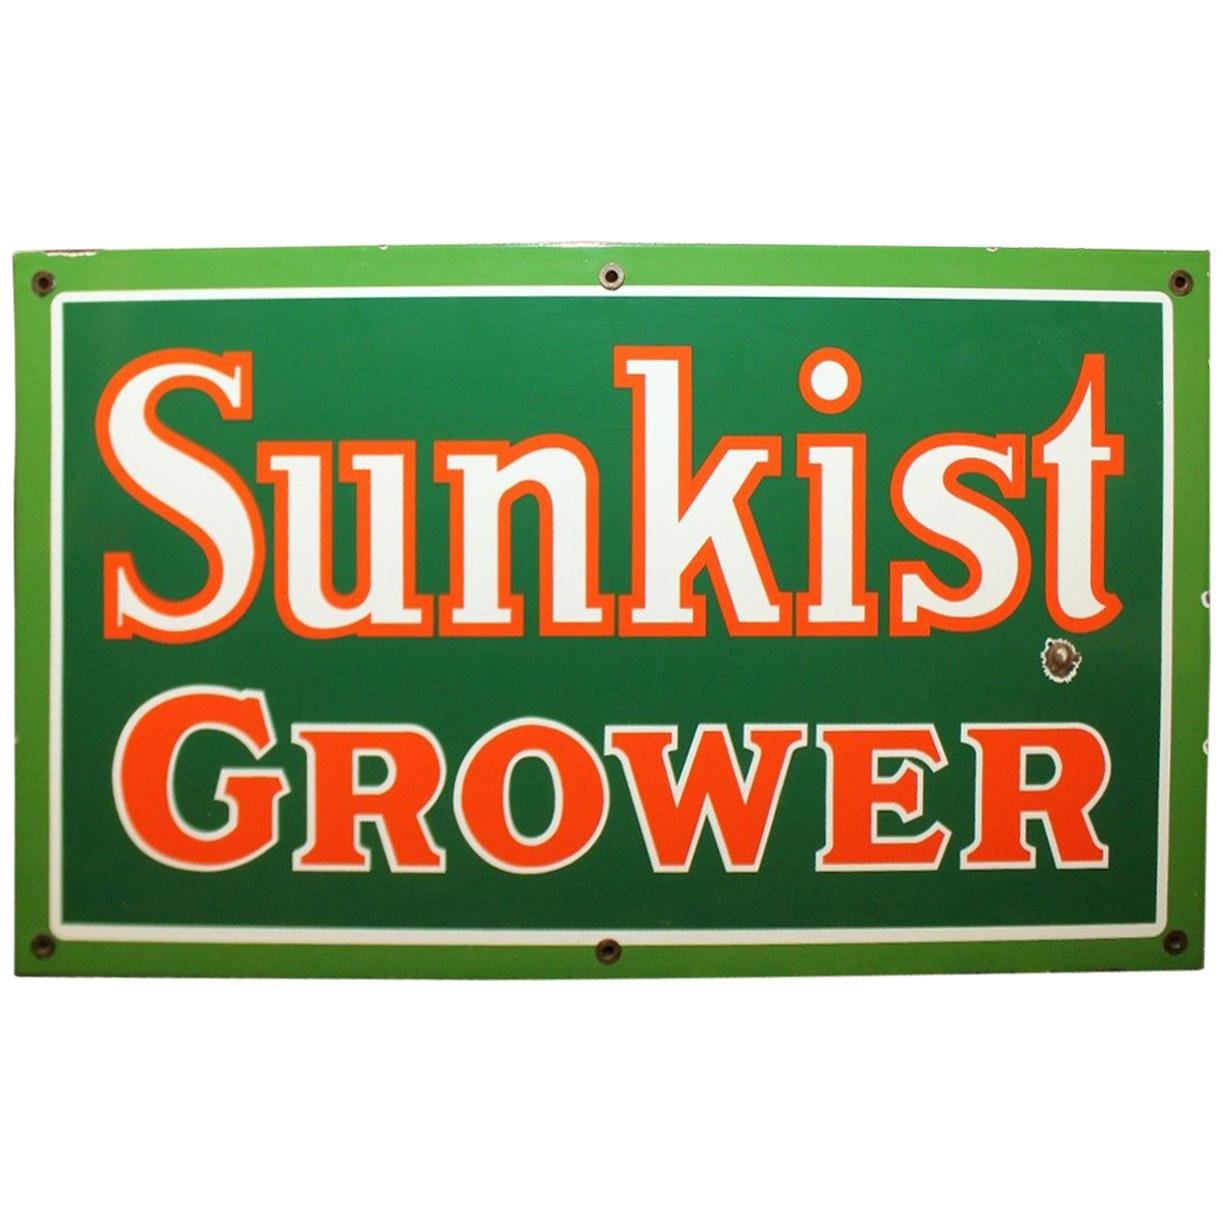 Original Sunkist Grower Enamel Metal Sign From Disney Sunkist Store Display For Sale